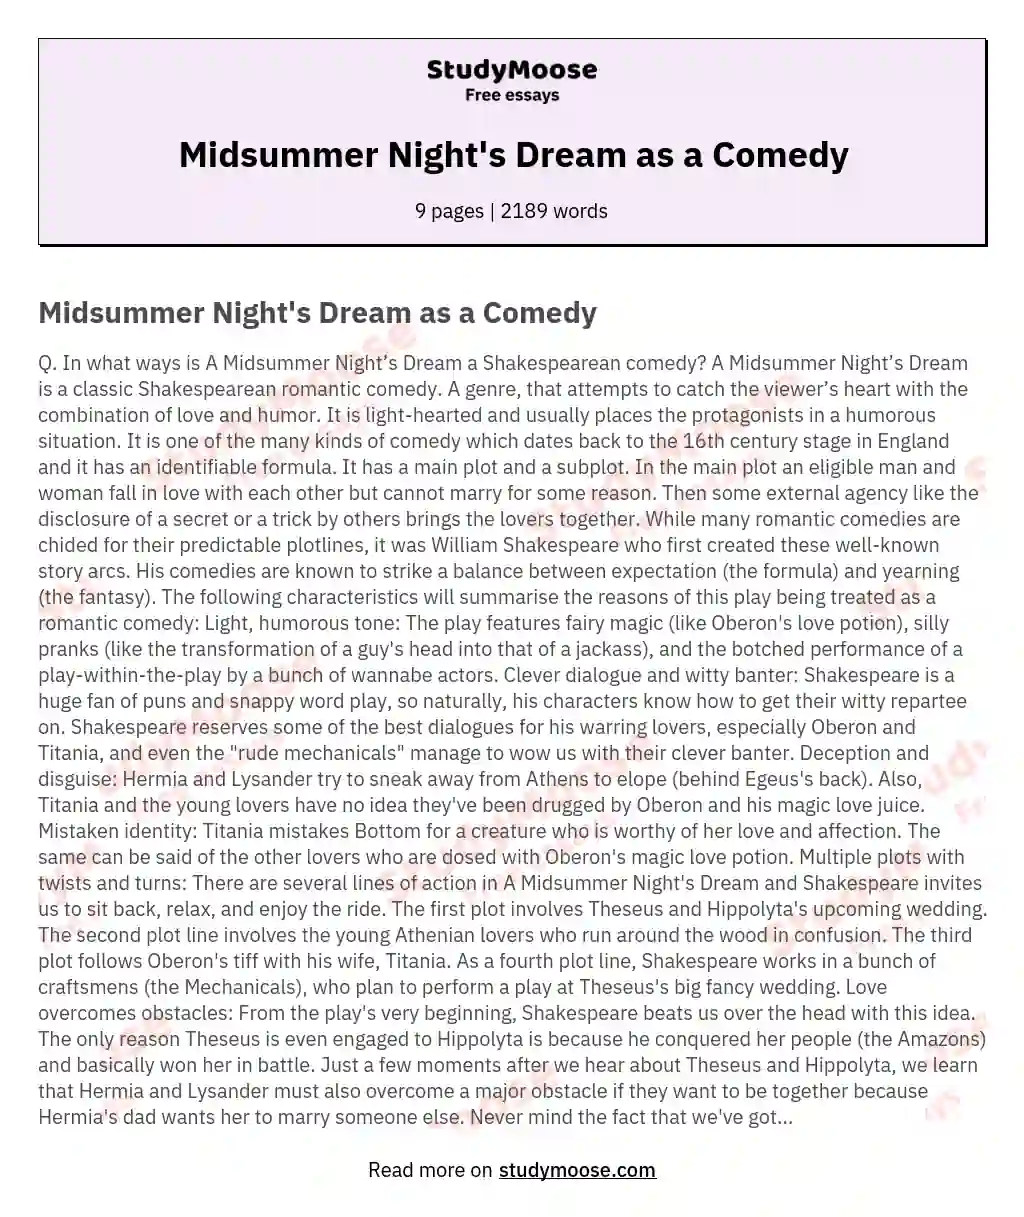 Midsummer Night's Dream as a Comedy essay